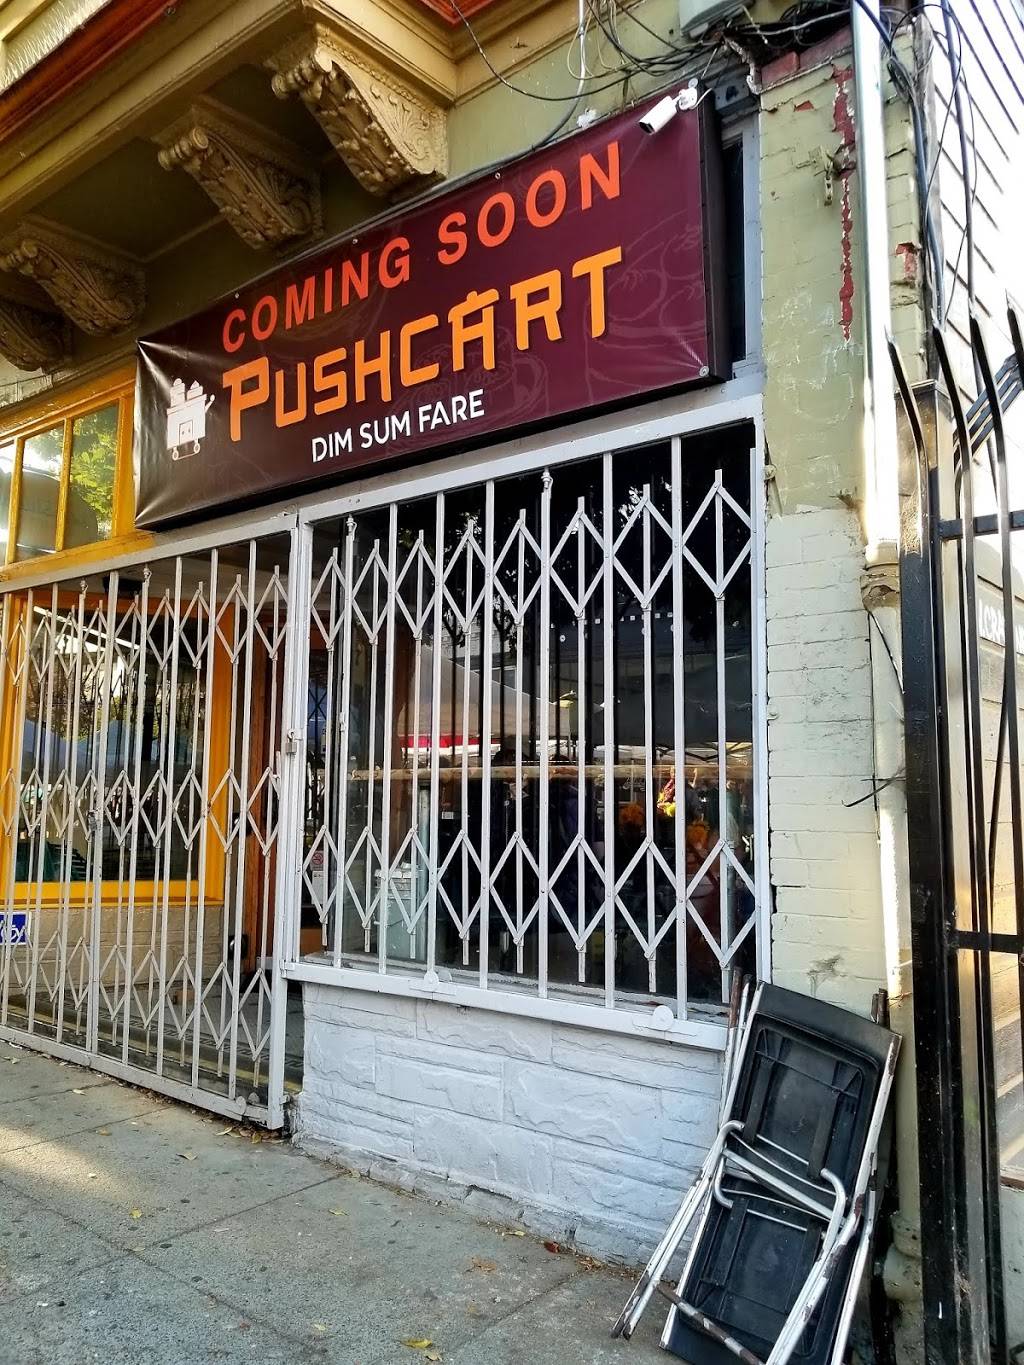 Pushcart Dim Sum Fare | restaurant | 3224 22nd St, San Francisco, CA 94110, USA | 4159571688 OR +1 415-957-1688